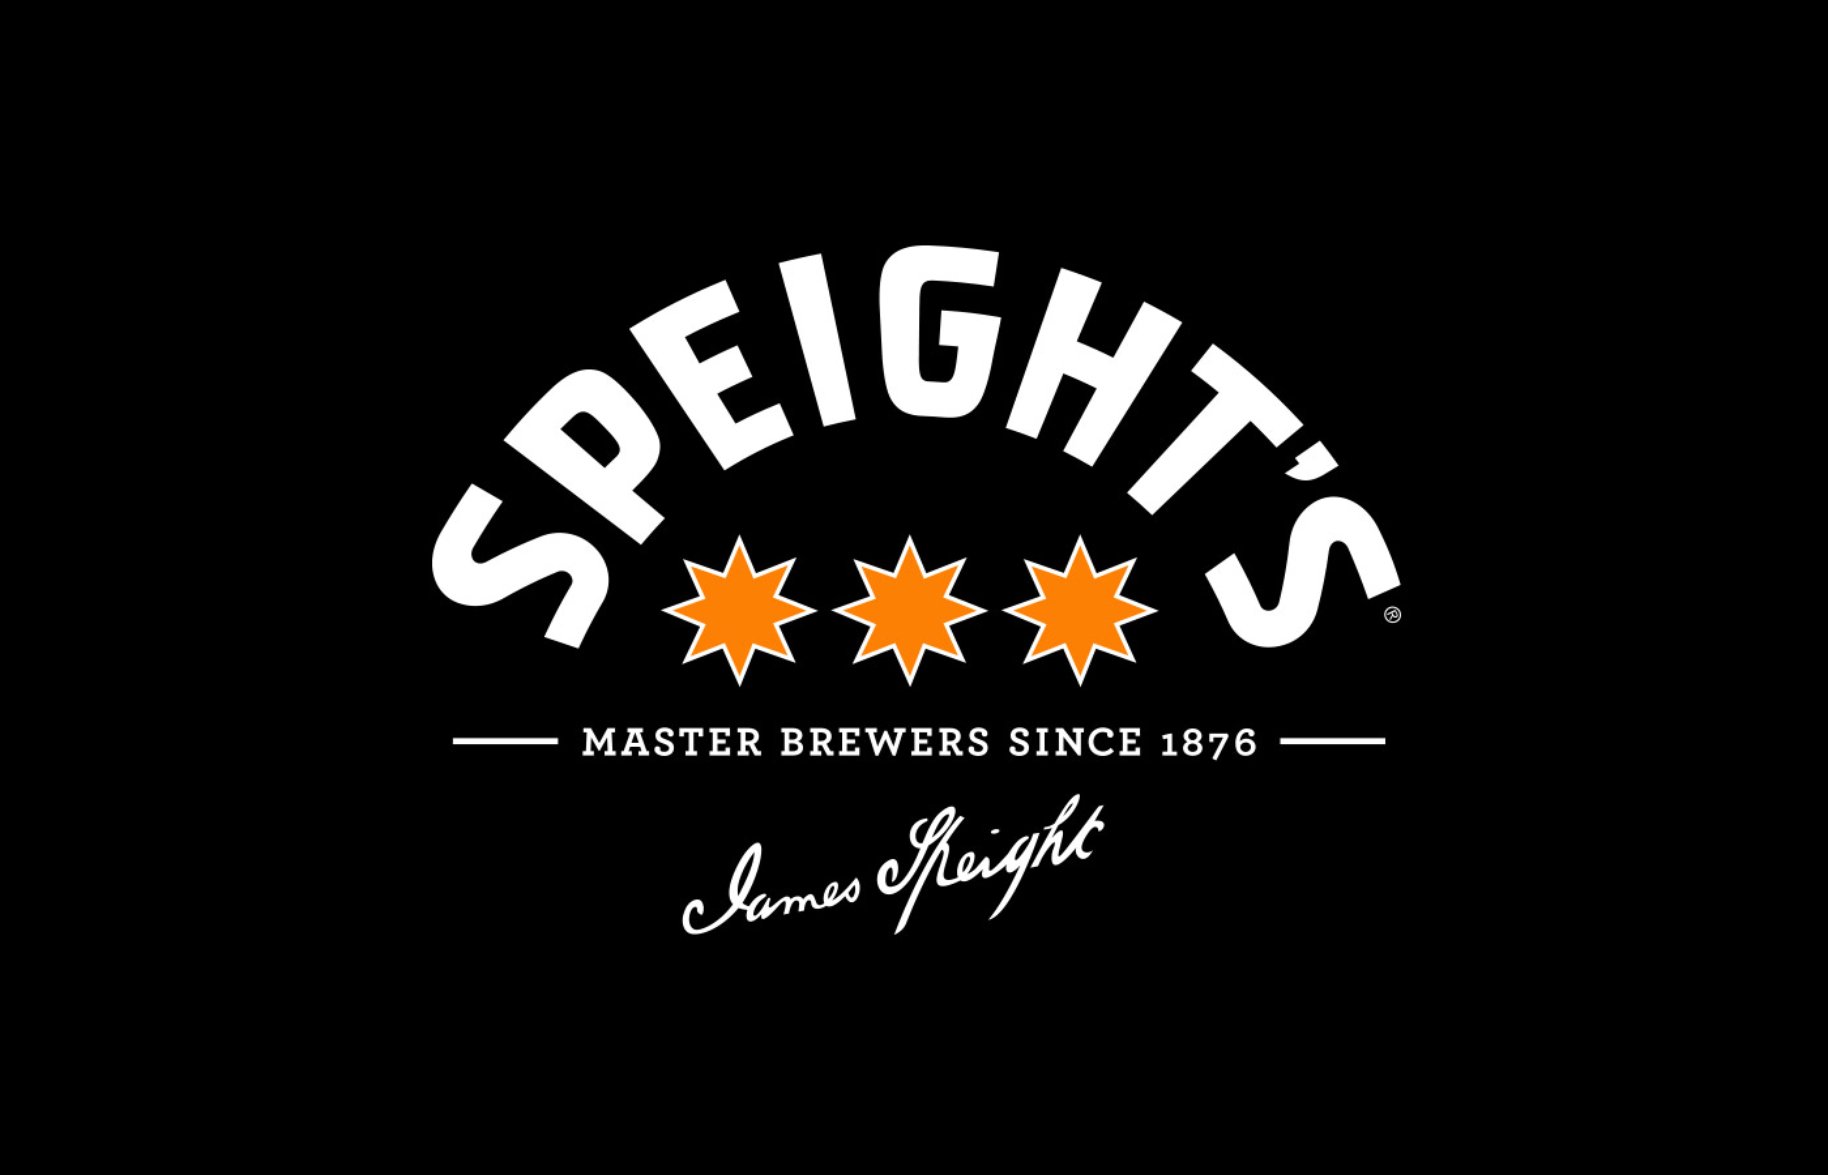 Speight's logo black background 